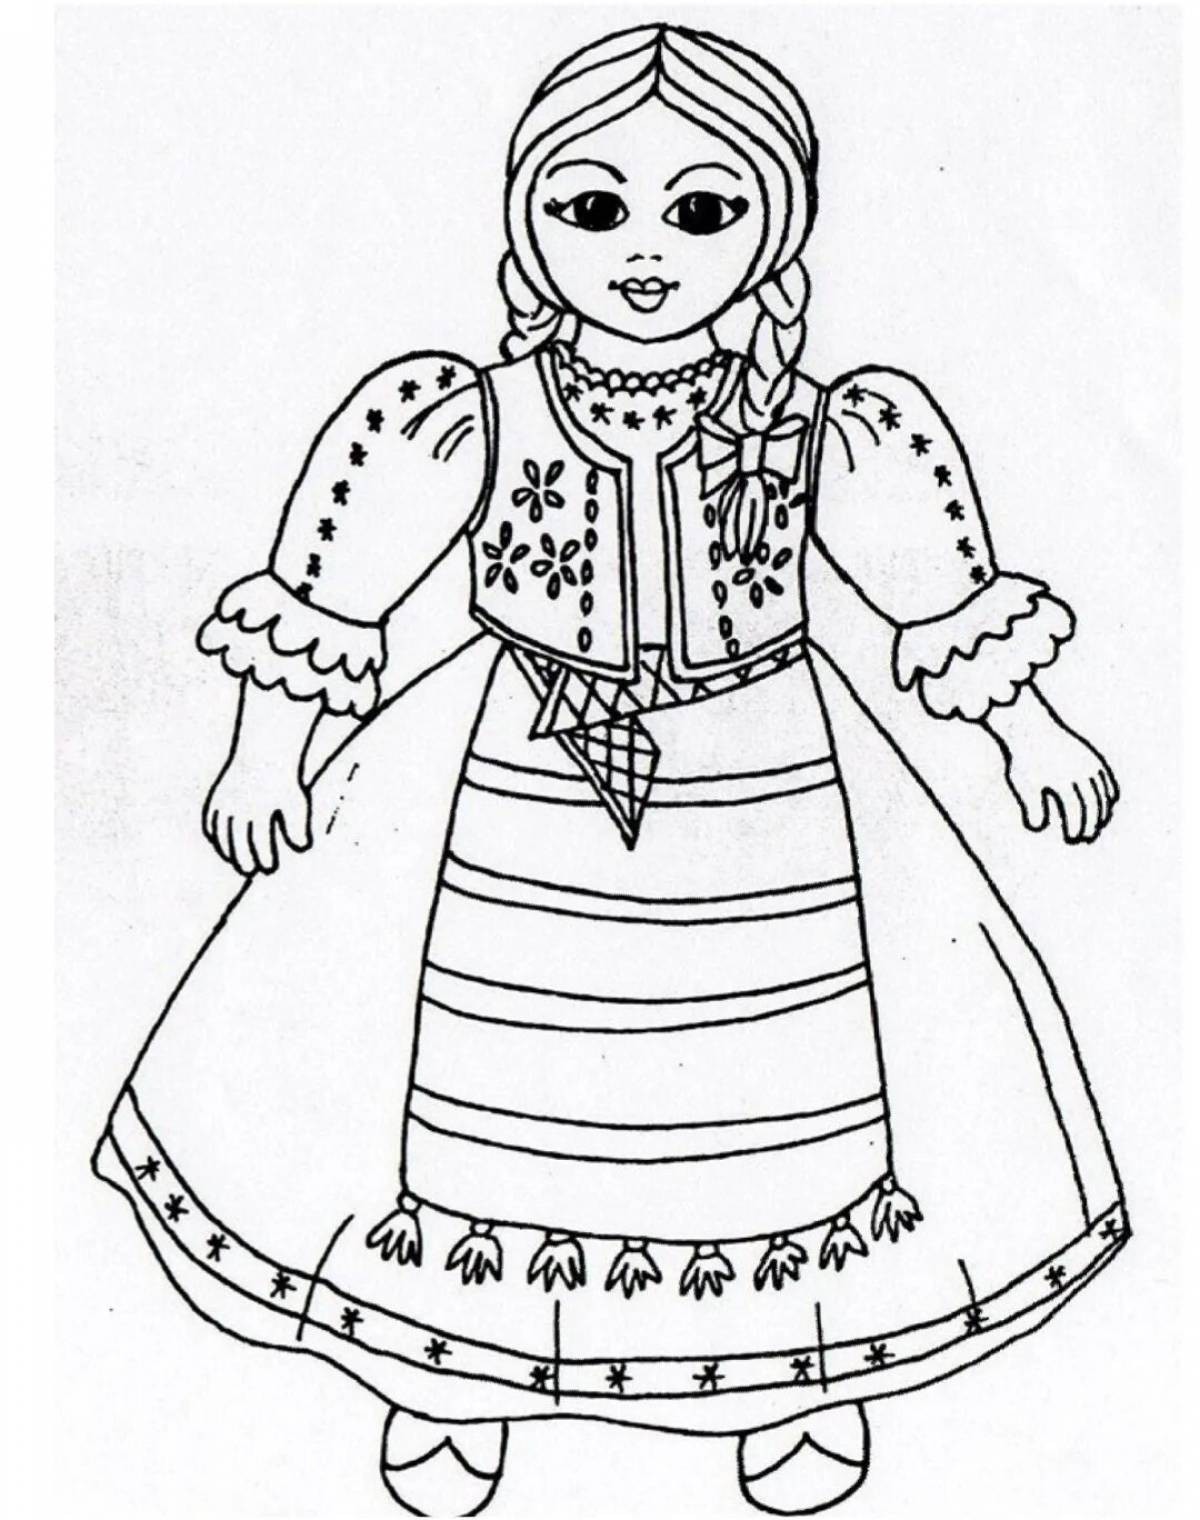 Coloring page intricate Chuvash folk costume